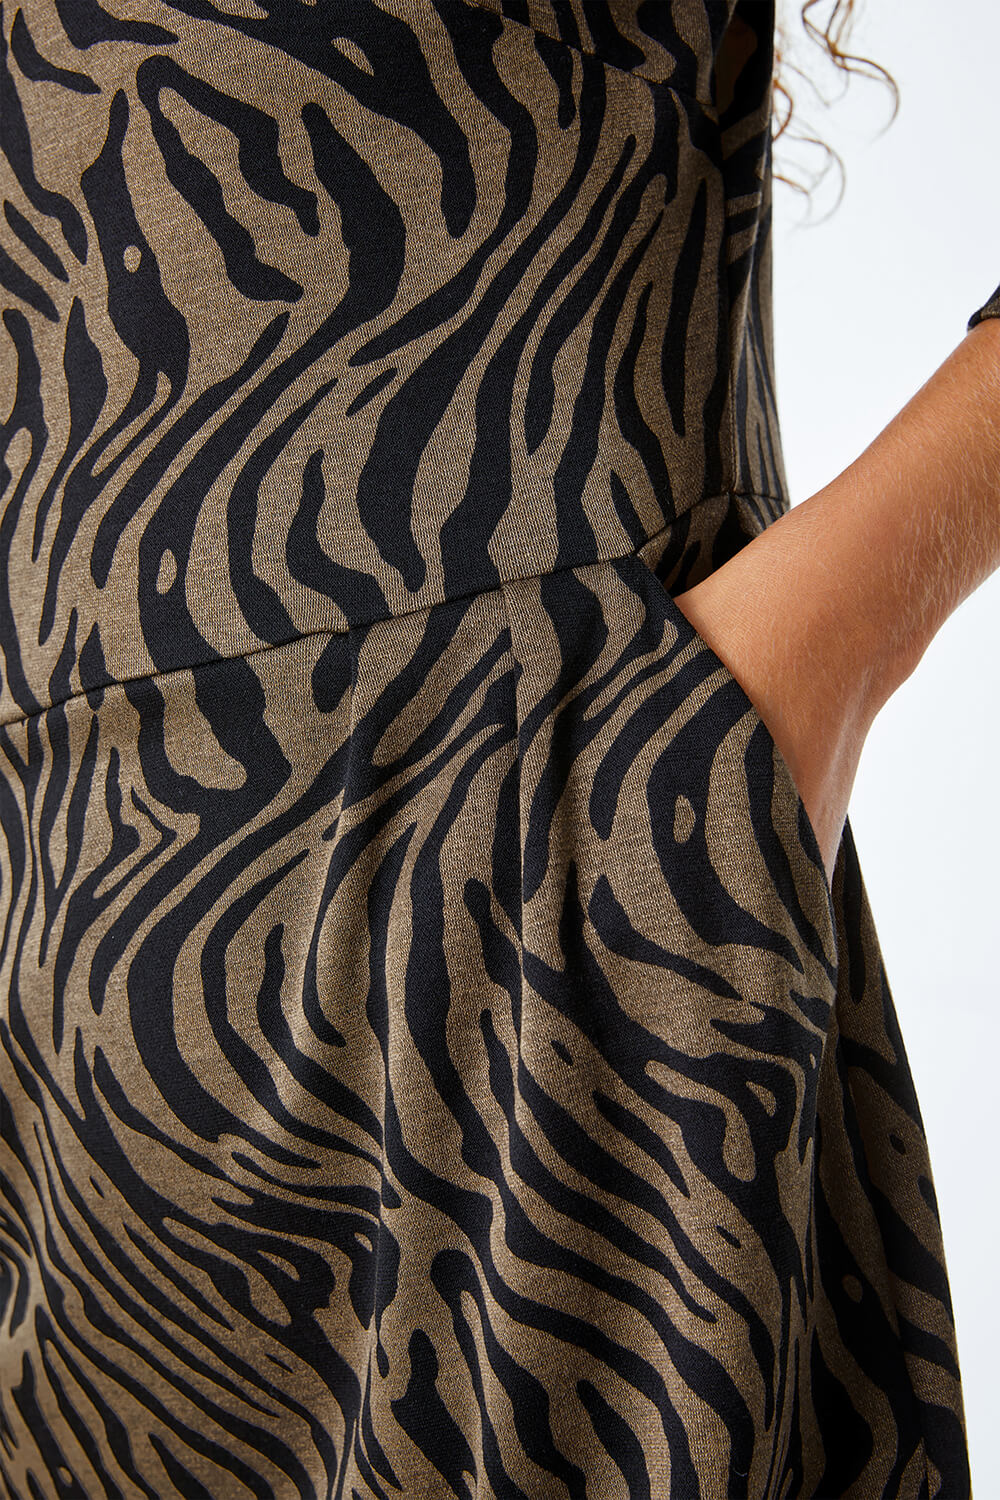 KHAKI Tiger Print Pocket Shift Dress, Image 5 of 5